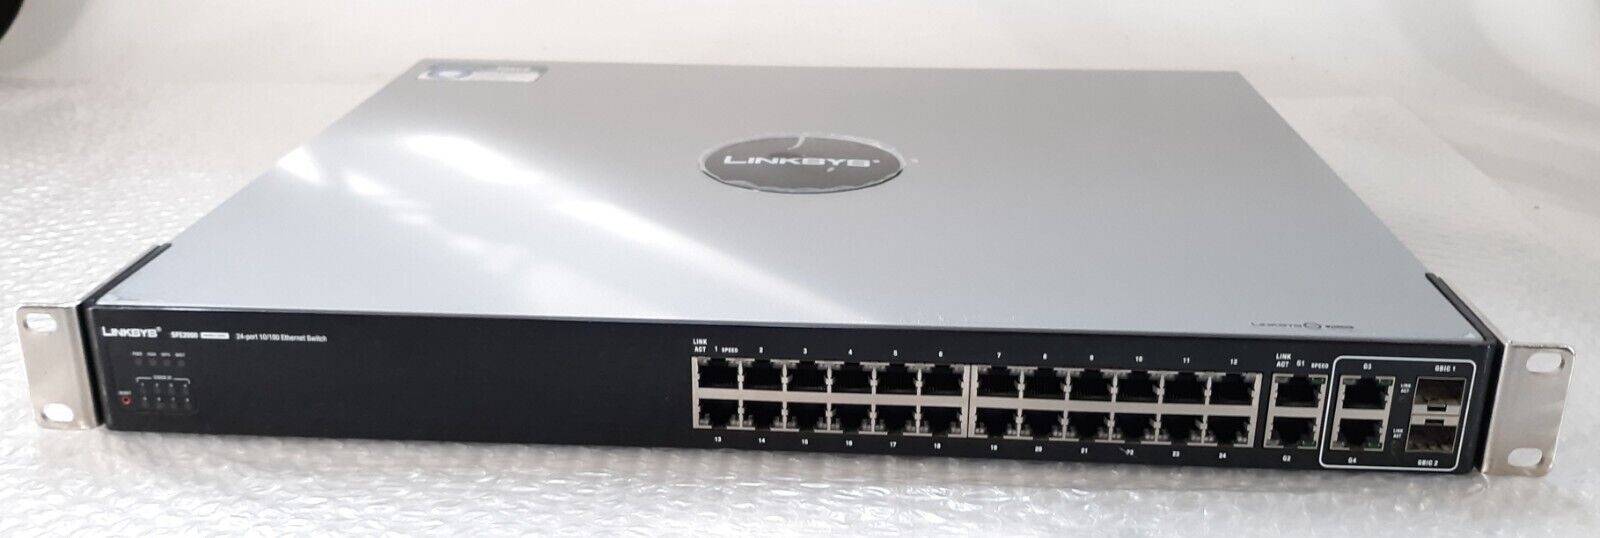 Cisco Linksys Business Series SFE2000 24-Port 10/100 Ethernet Switch w/ Cord